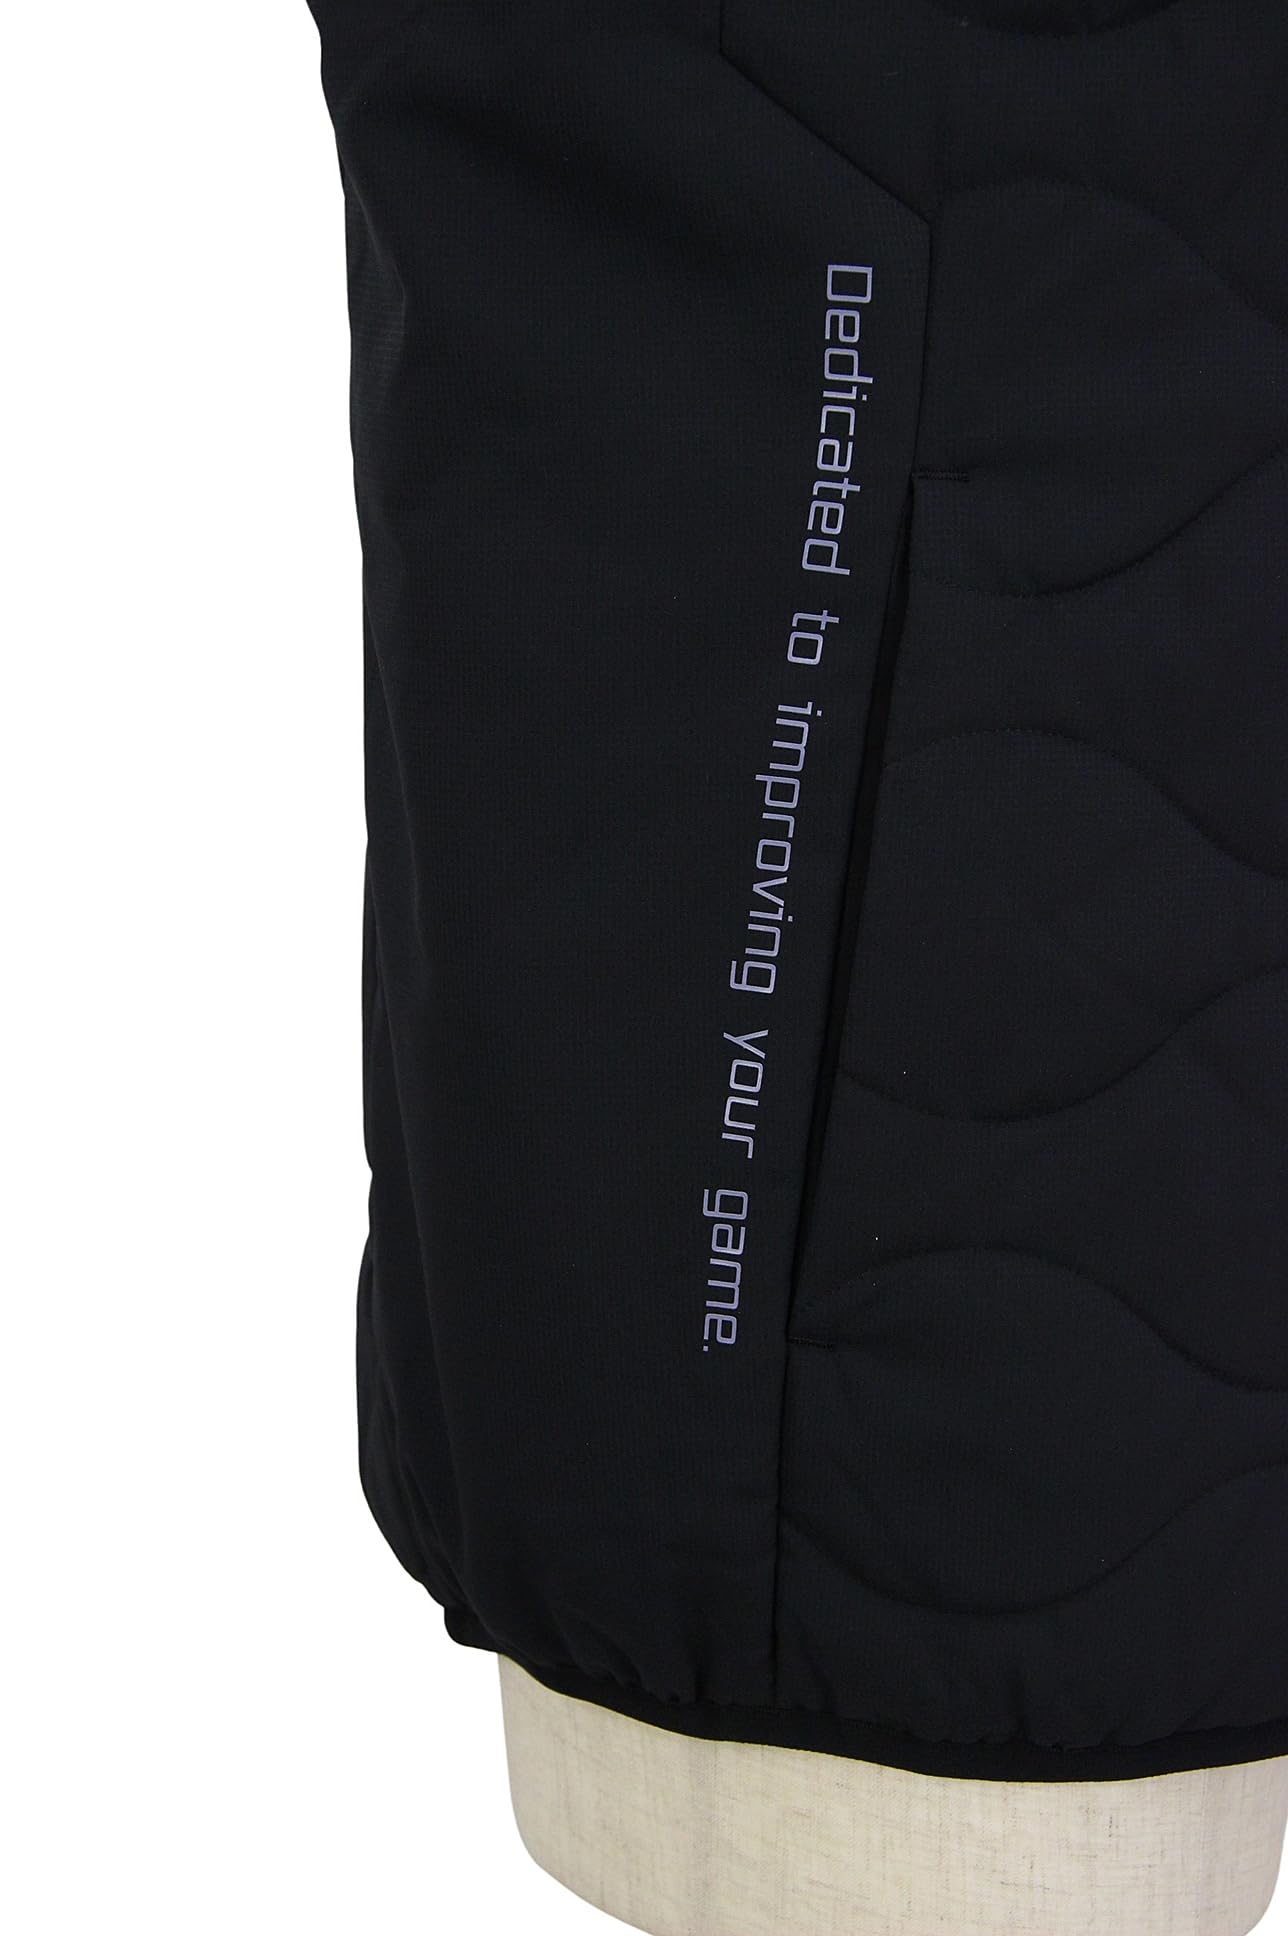 Srixon RGMWJK50 Men's Outerwear Vest, Heat Retention, Heat Retention, Water Repellent, Stretch, Quilt, Golf,